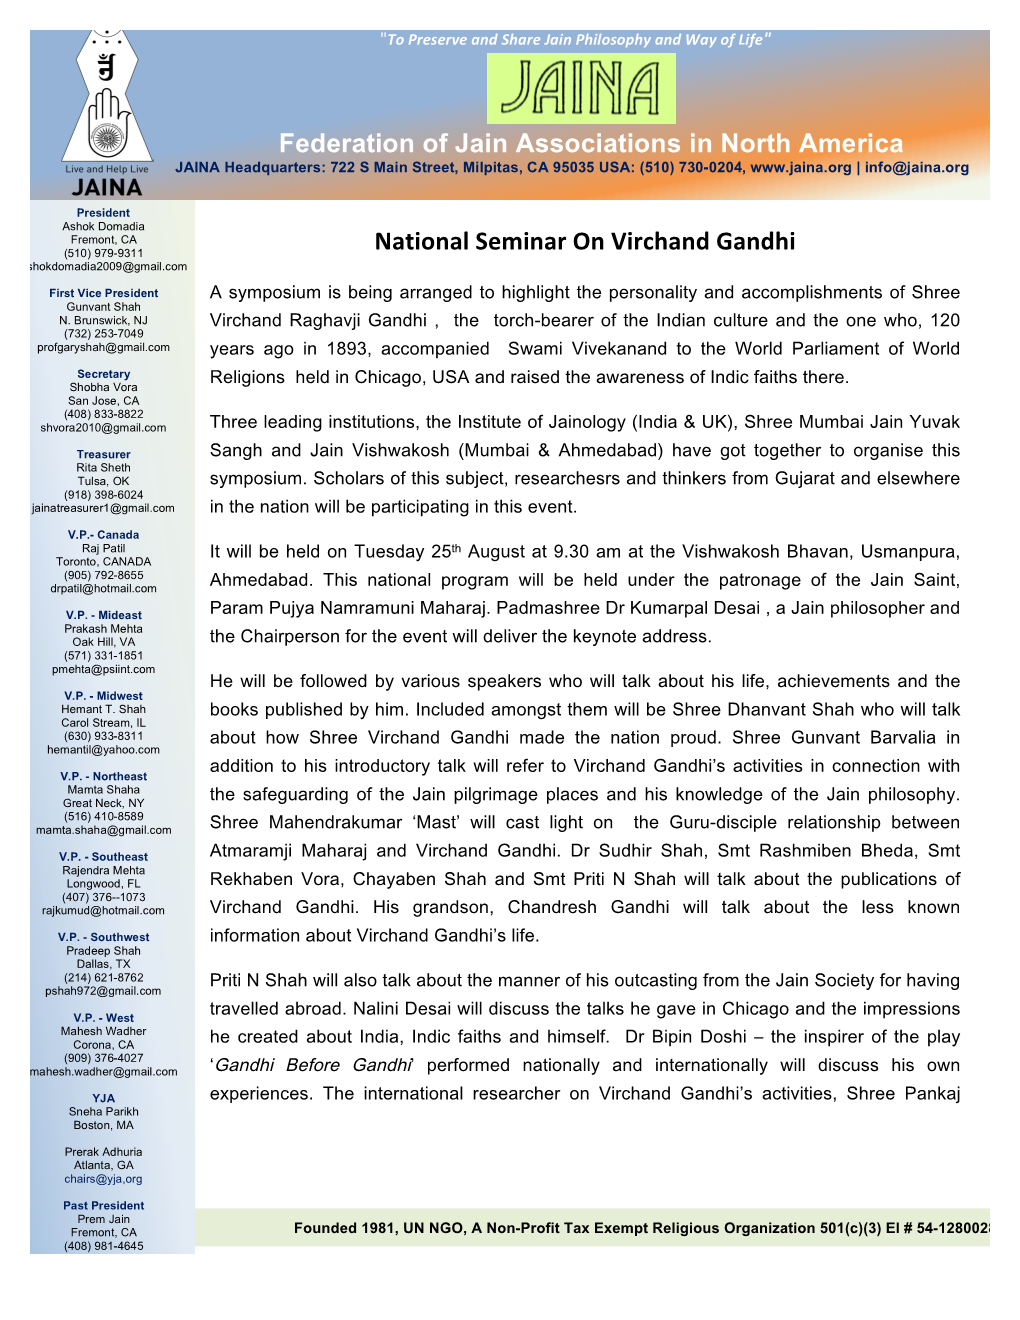 Federation of Jain Associations in North America National Seminar On